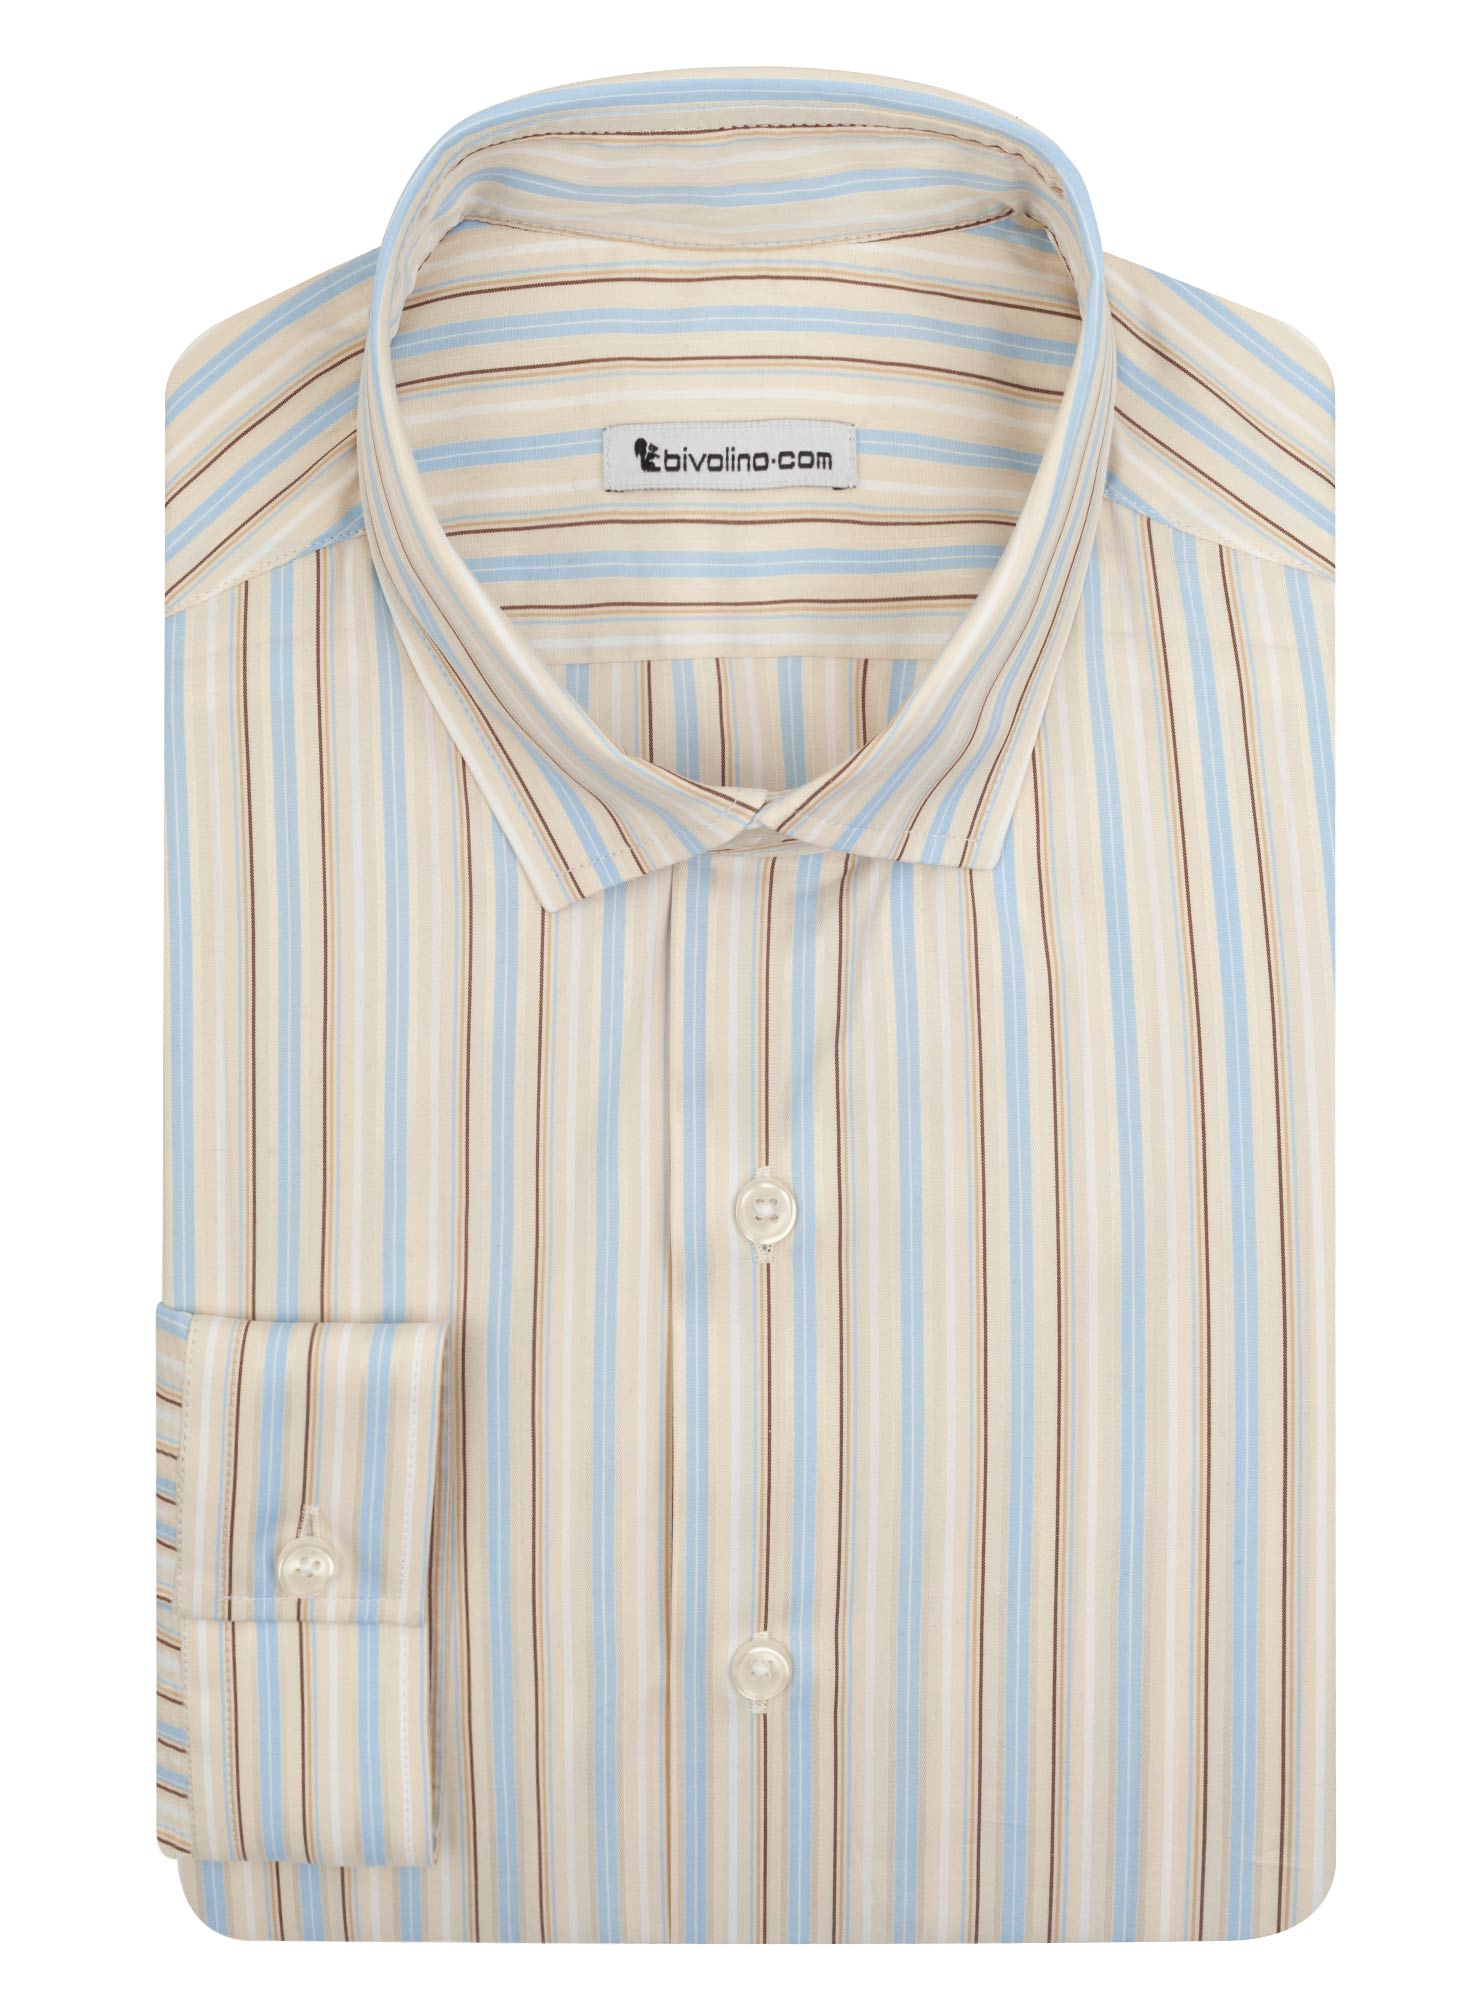 TERAMO - multicolor bayadere striped beige-blue shirt - TANA 6